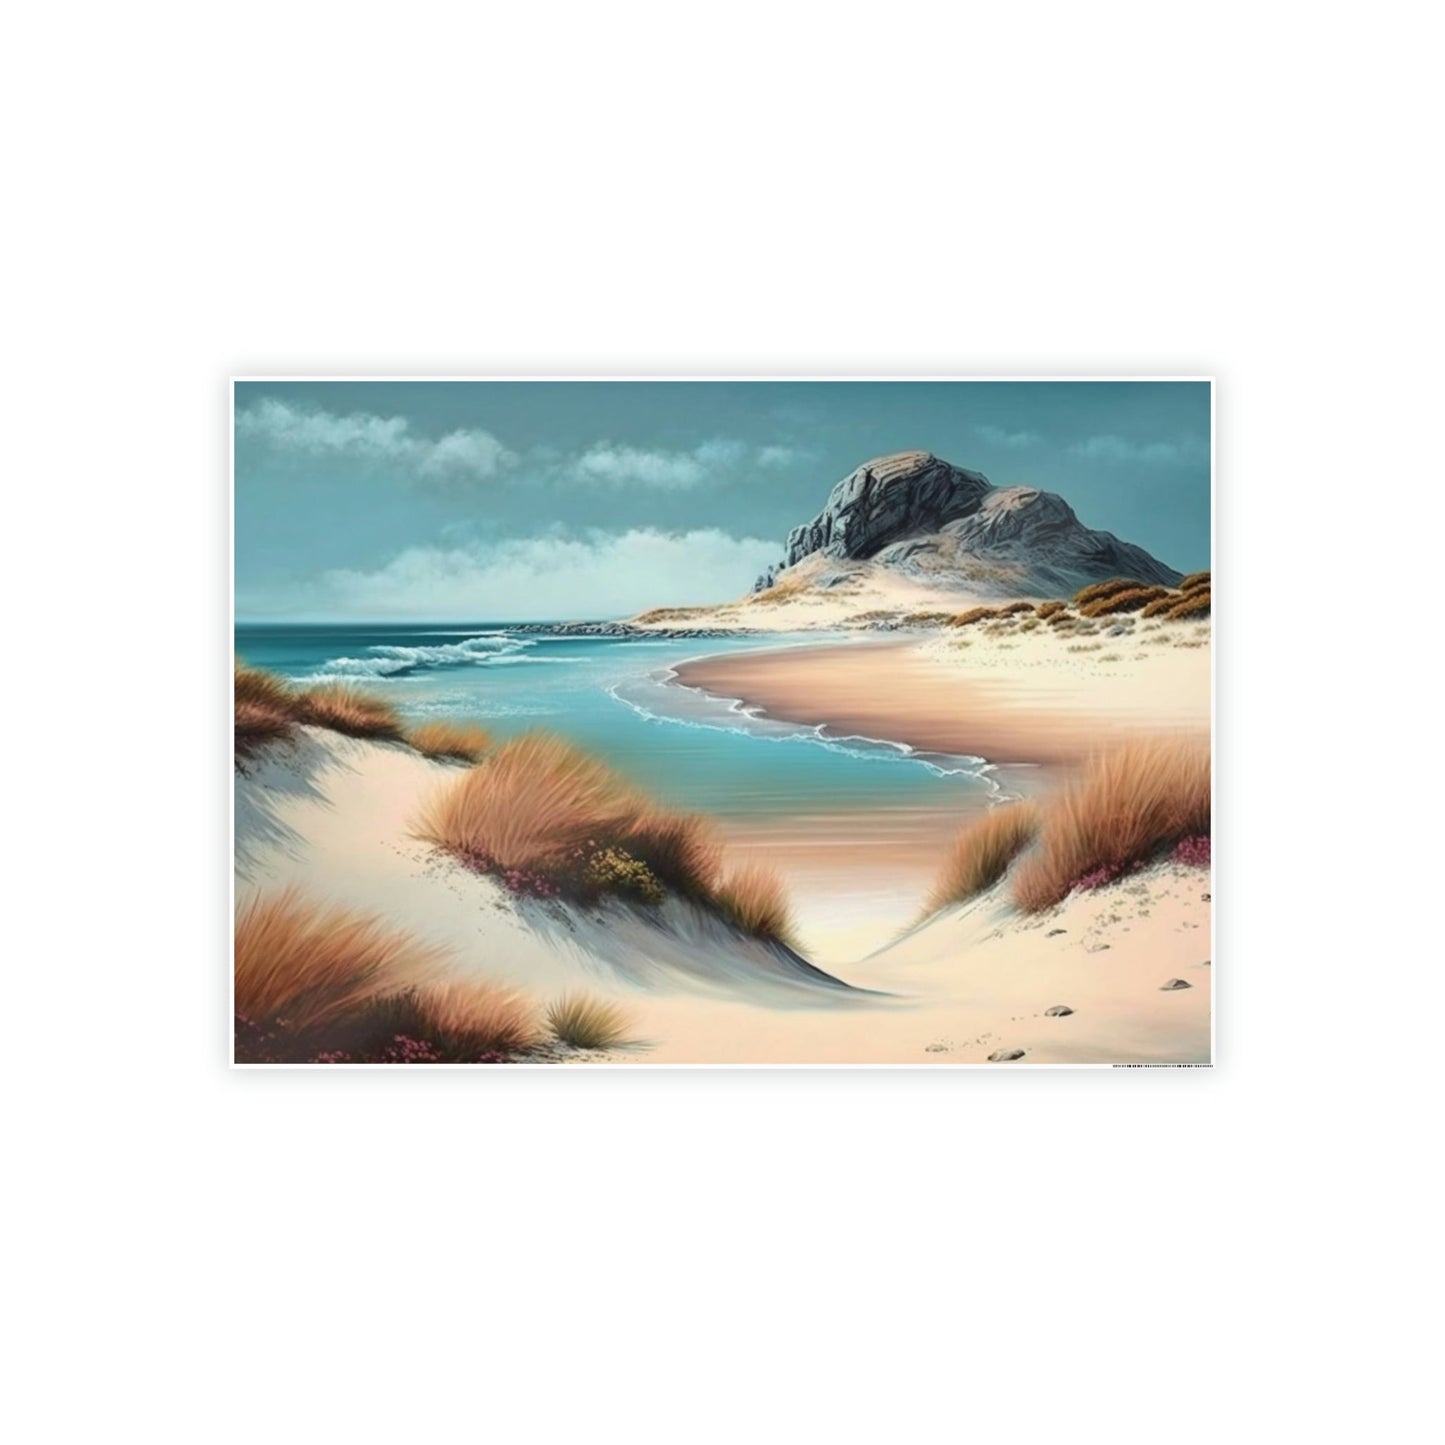 Oceanic Escape: Natural Canvas Art of an Island Beach